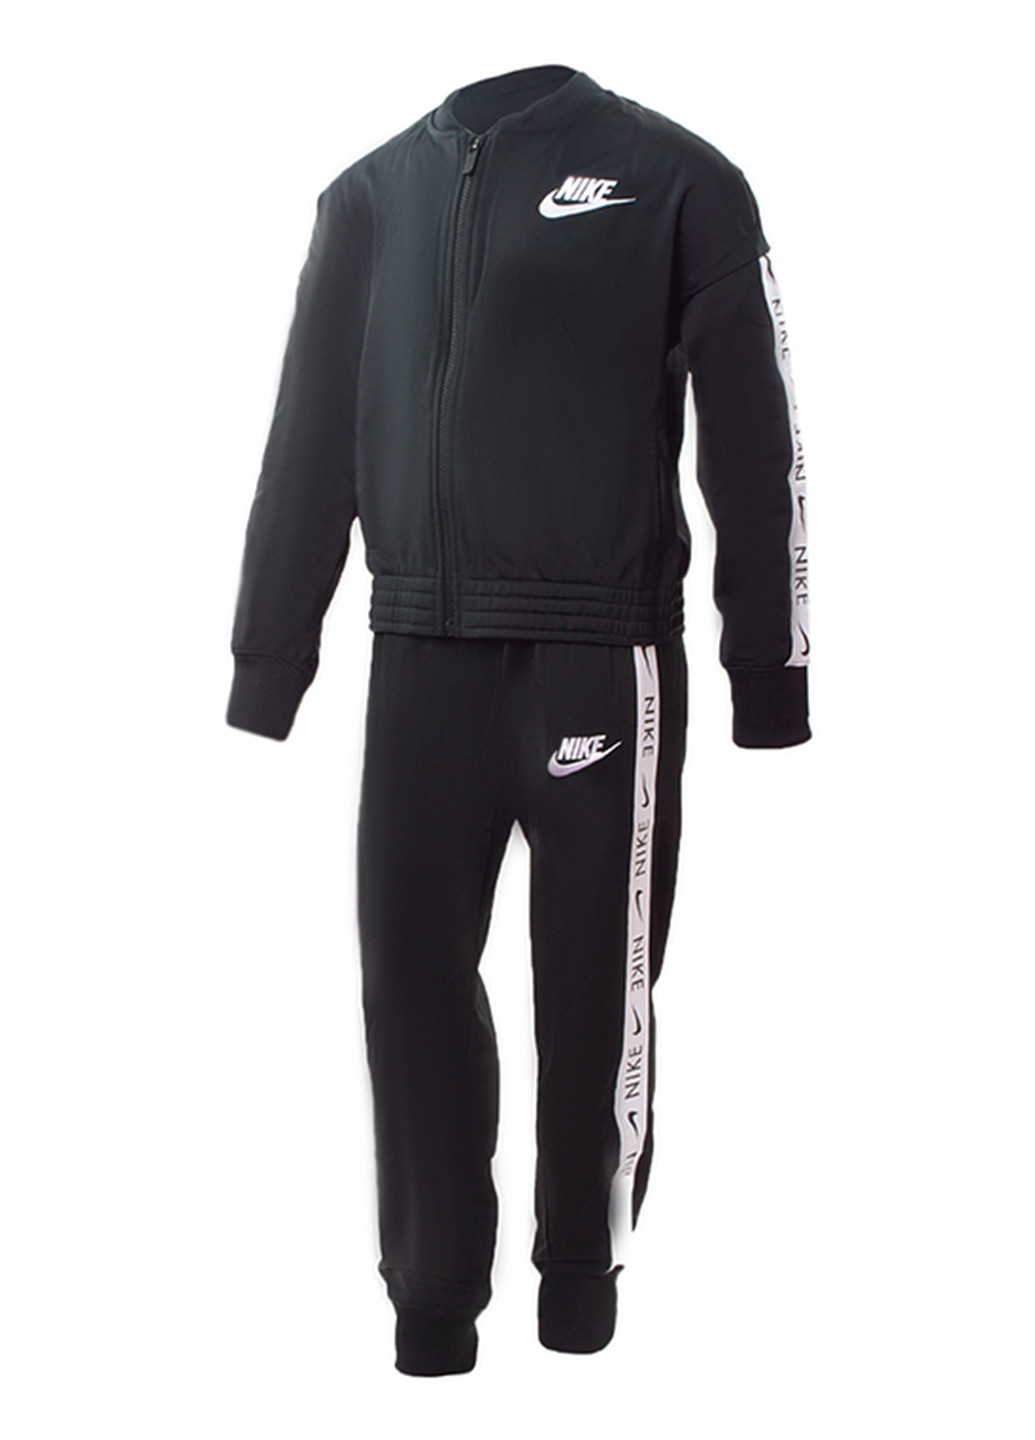 Черный демисезонный костюм (олимпийка, брюки) брючный Nike G NSW TRK SUIT TRICOT